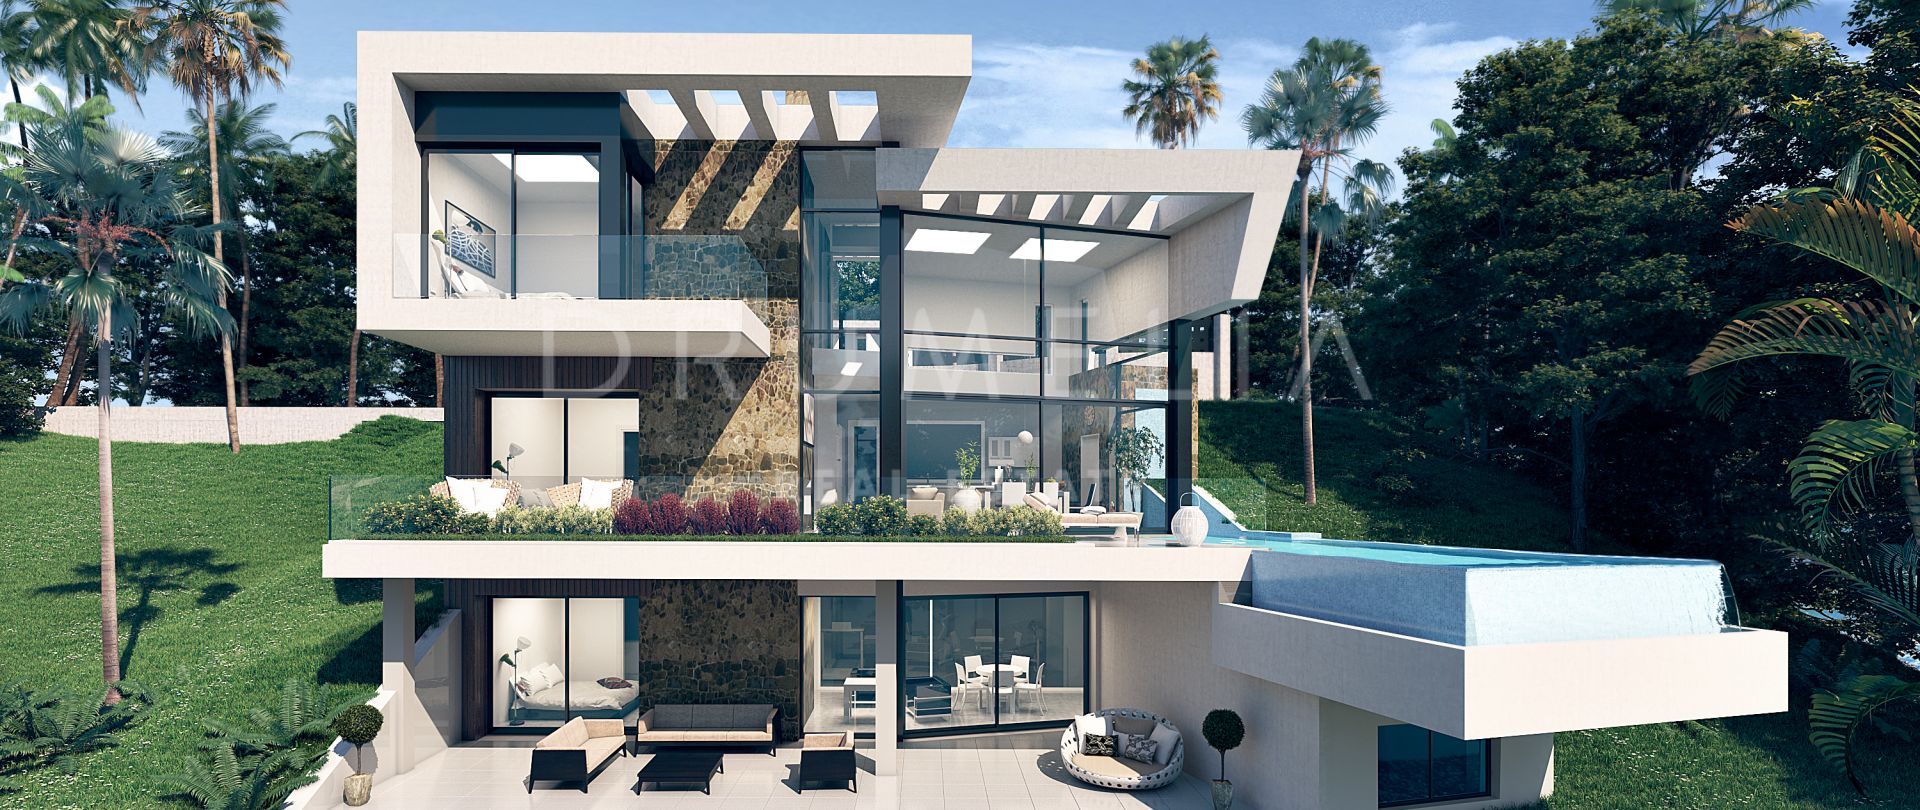 Brand new, turn-key modern luxury villa with panoramic mountain views in Valle Romano, Estepona